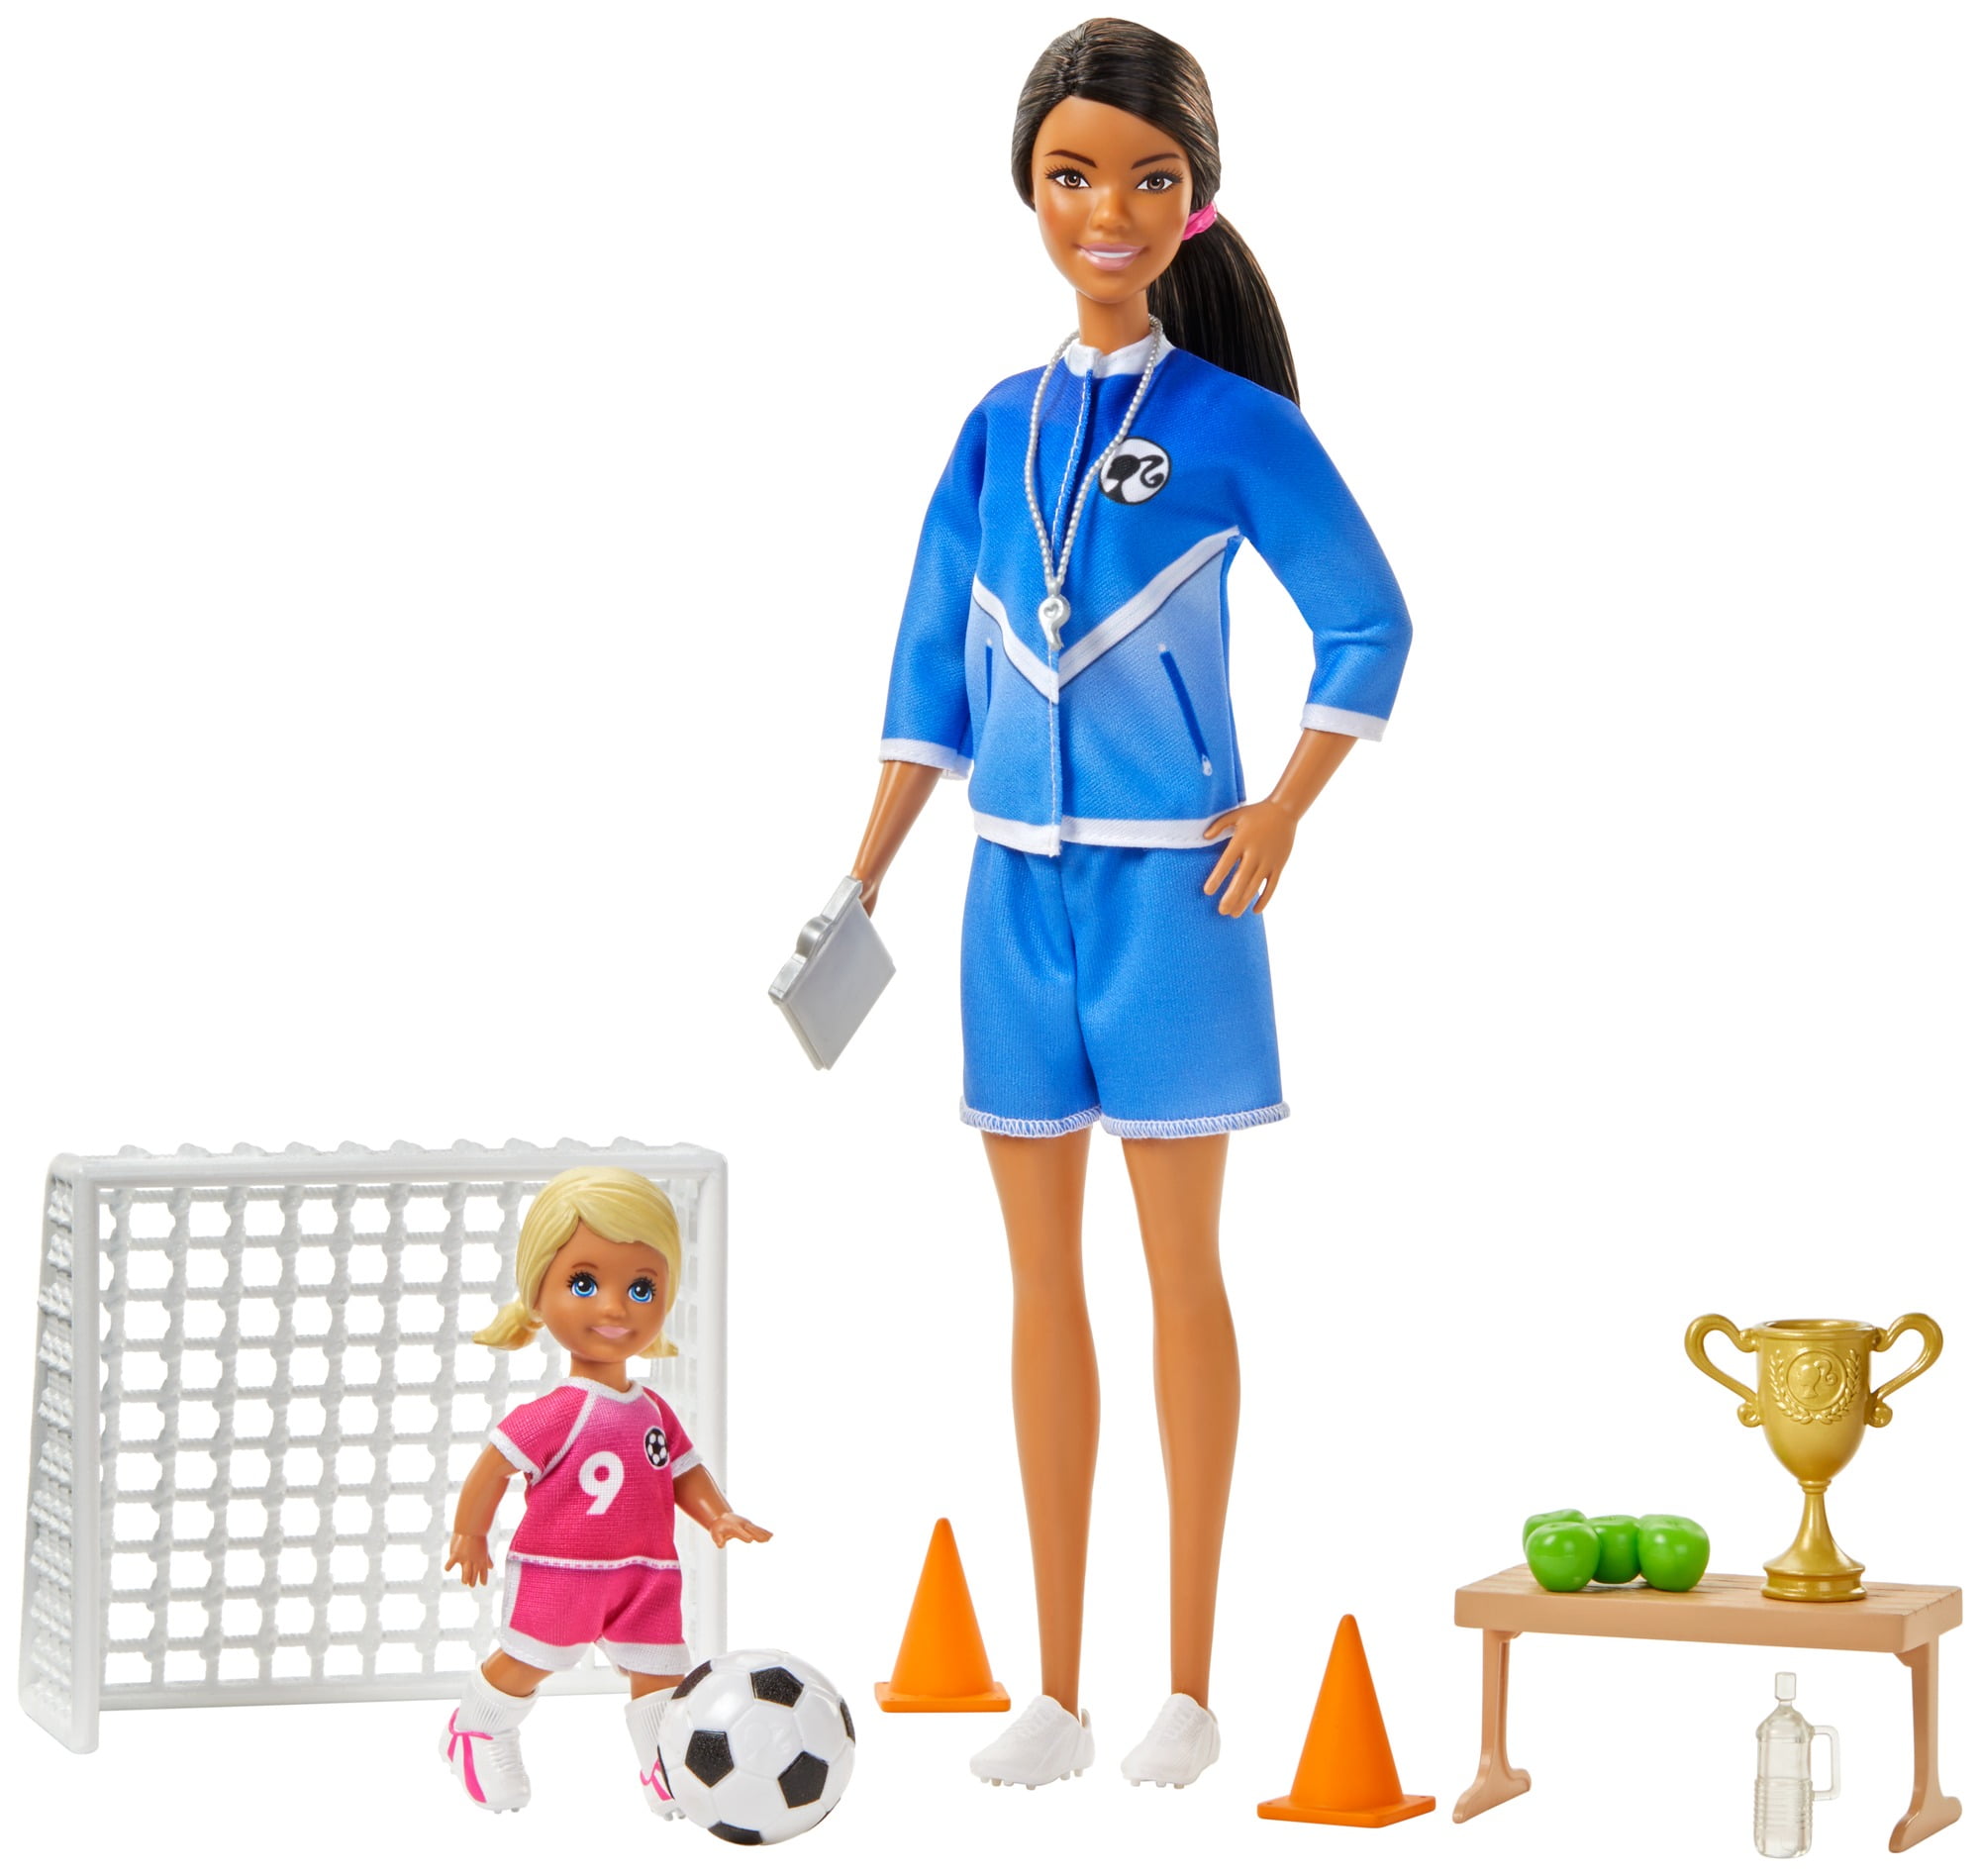 Barbie Doll Barbie Careers Tennis Coach Playset Toy Sports Athlete Set W/ Child 